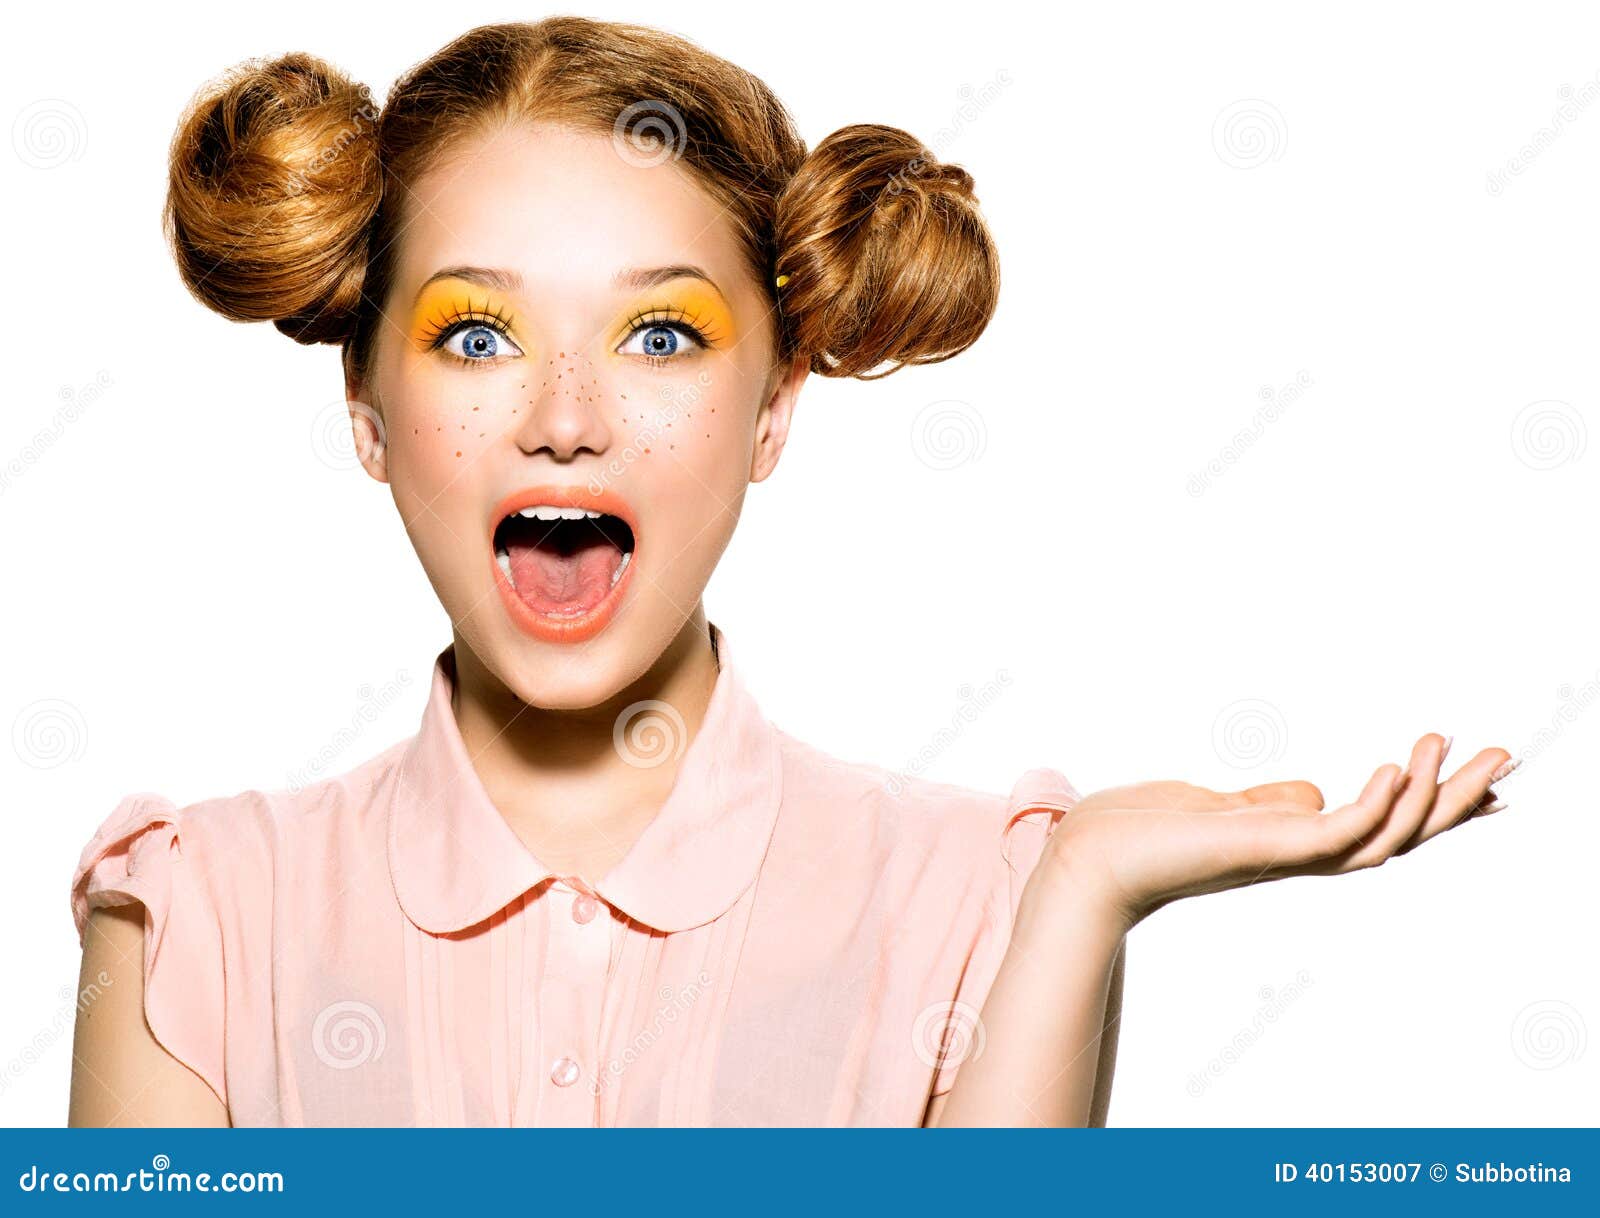 beautiful joyful teen girl with freckles